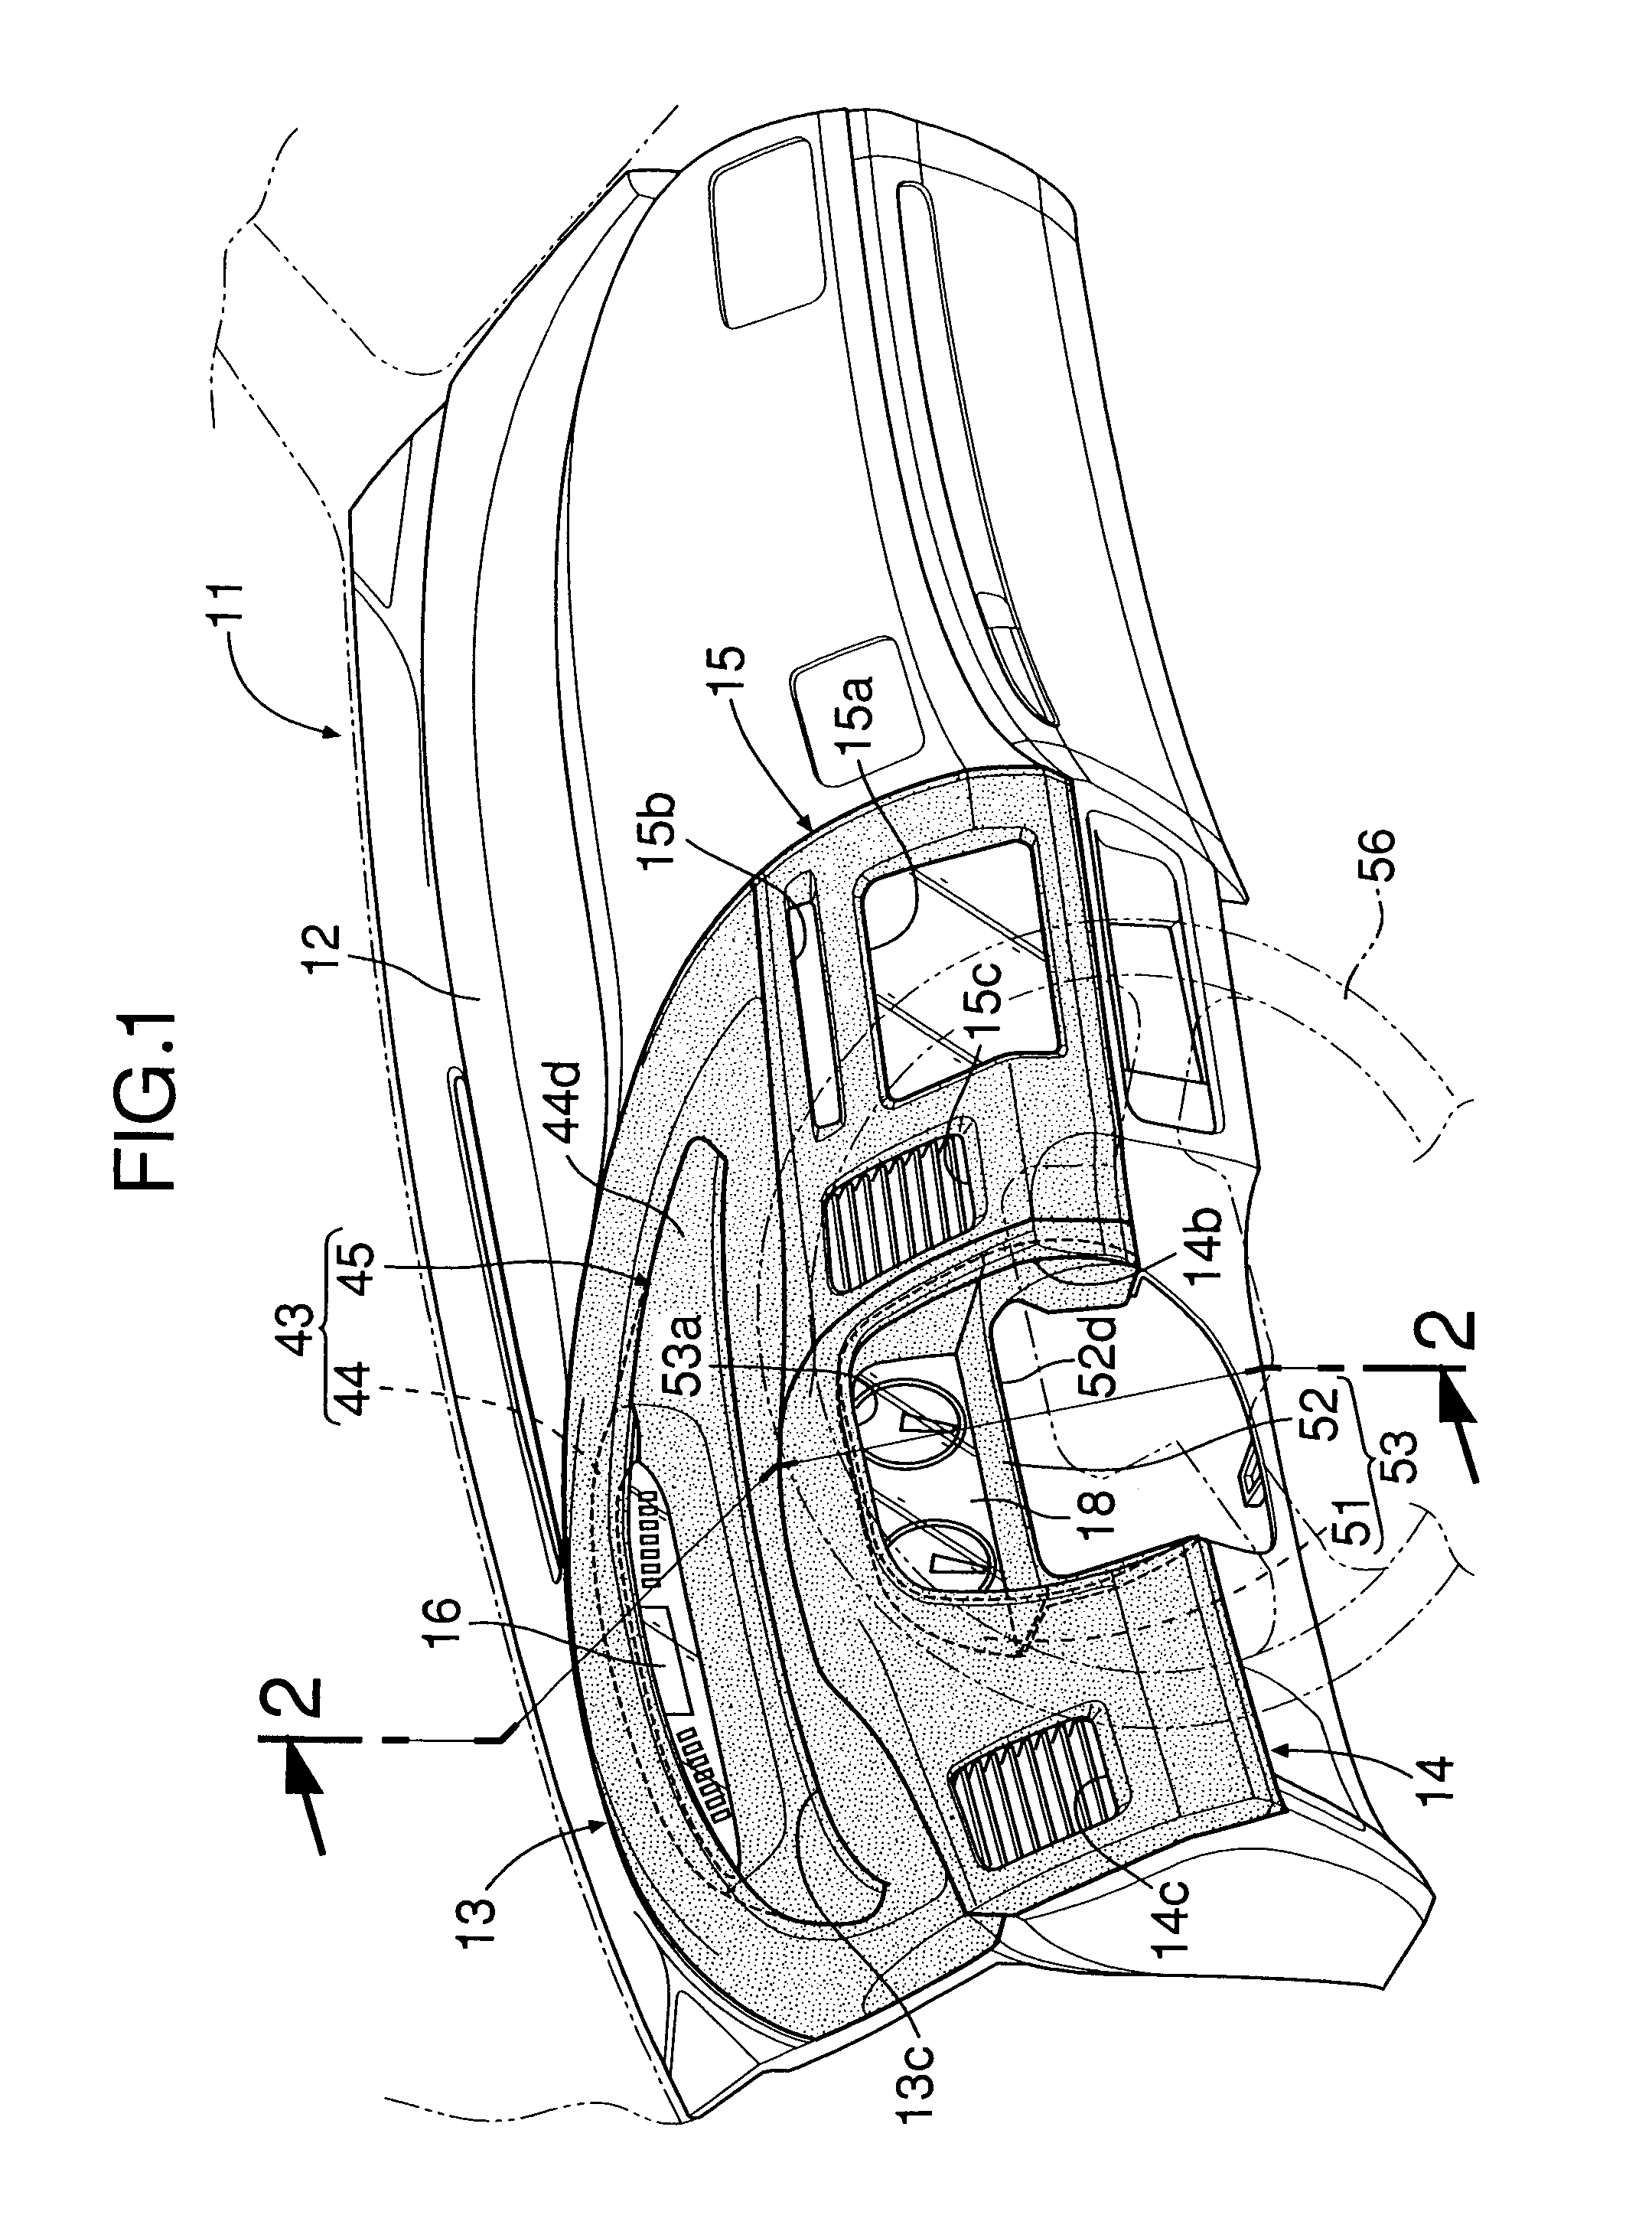 Automobile instrument panel structure